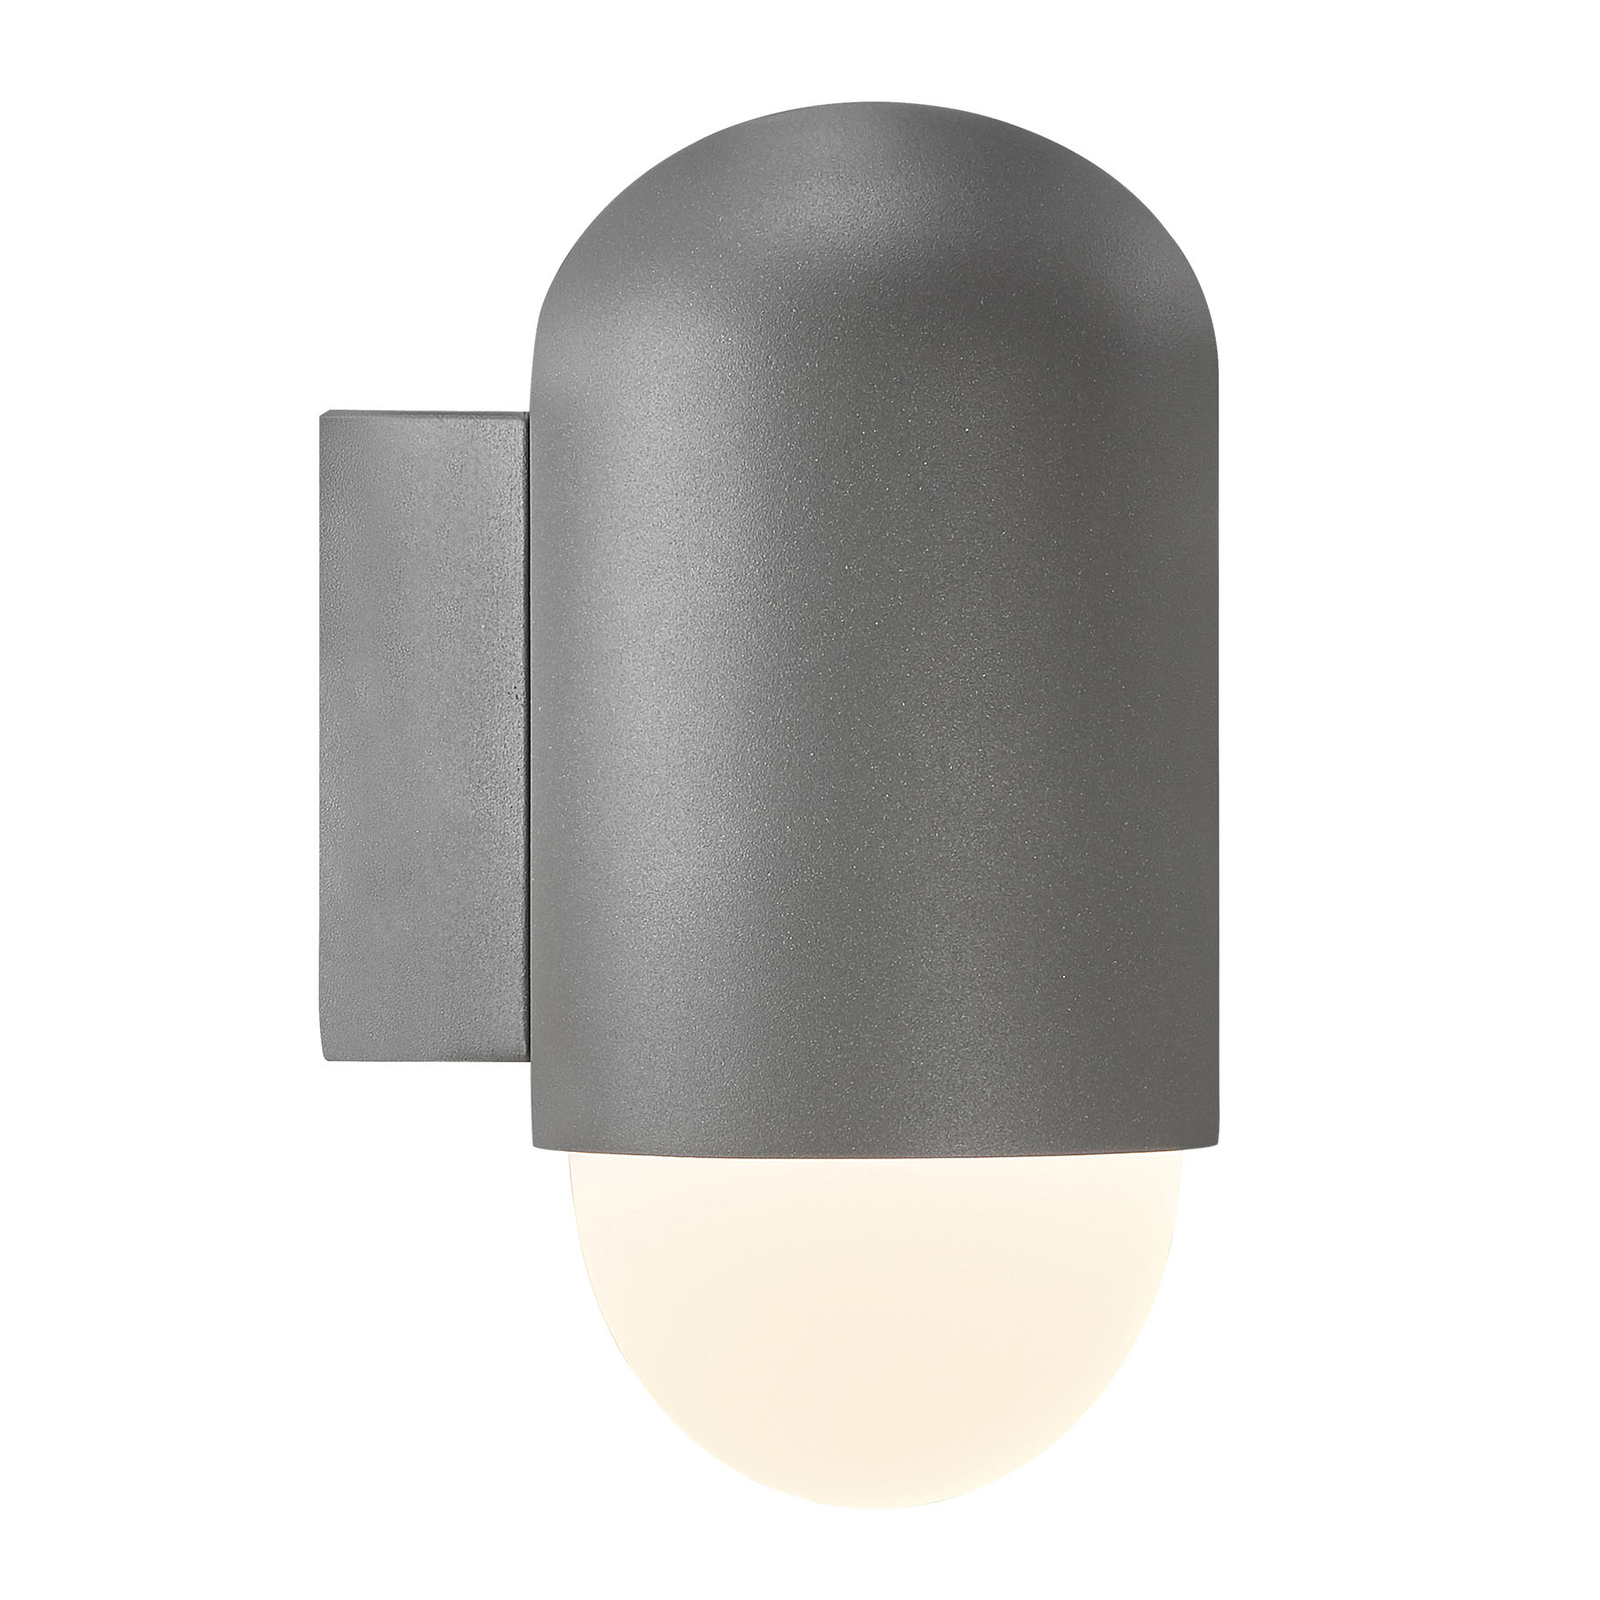 Outdoor wall lamp Heka, anthracite grey, aluminium, height 21.6 cm